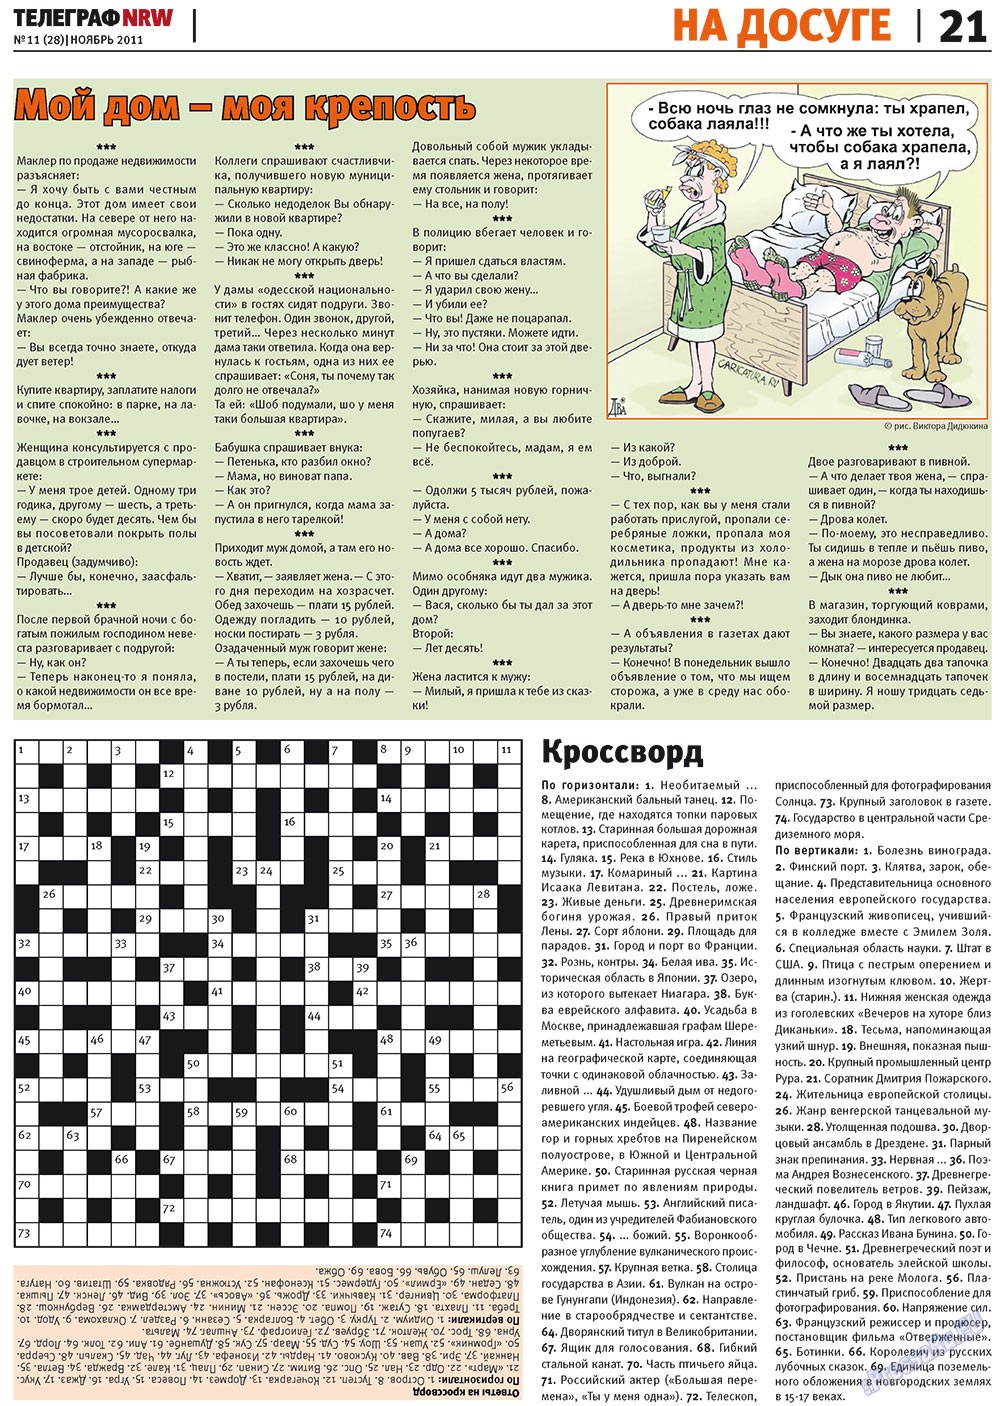 Телеграф NRW, газета. 2011 №11 стр.21